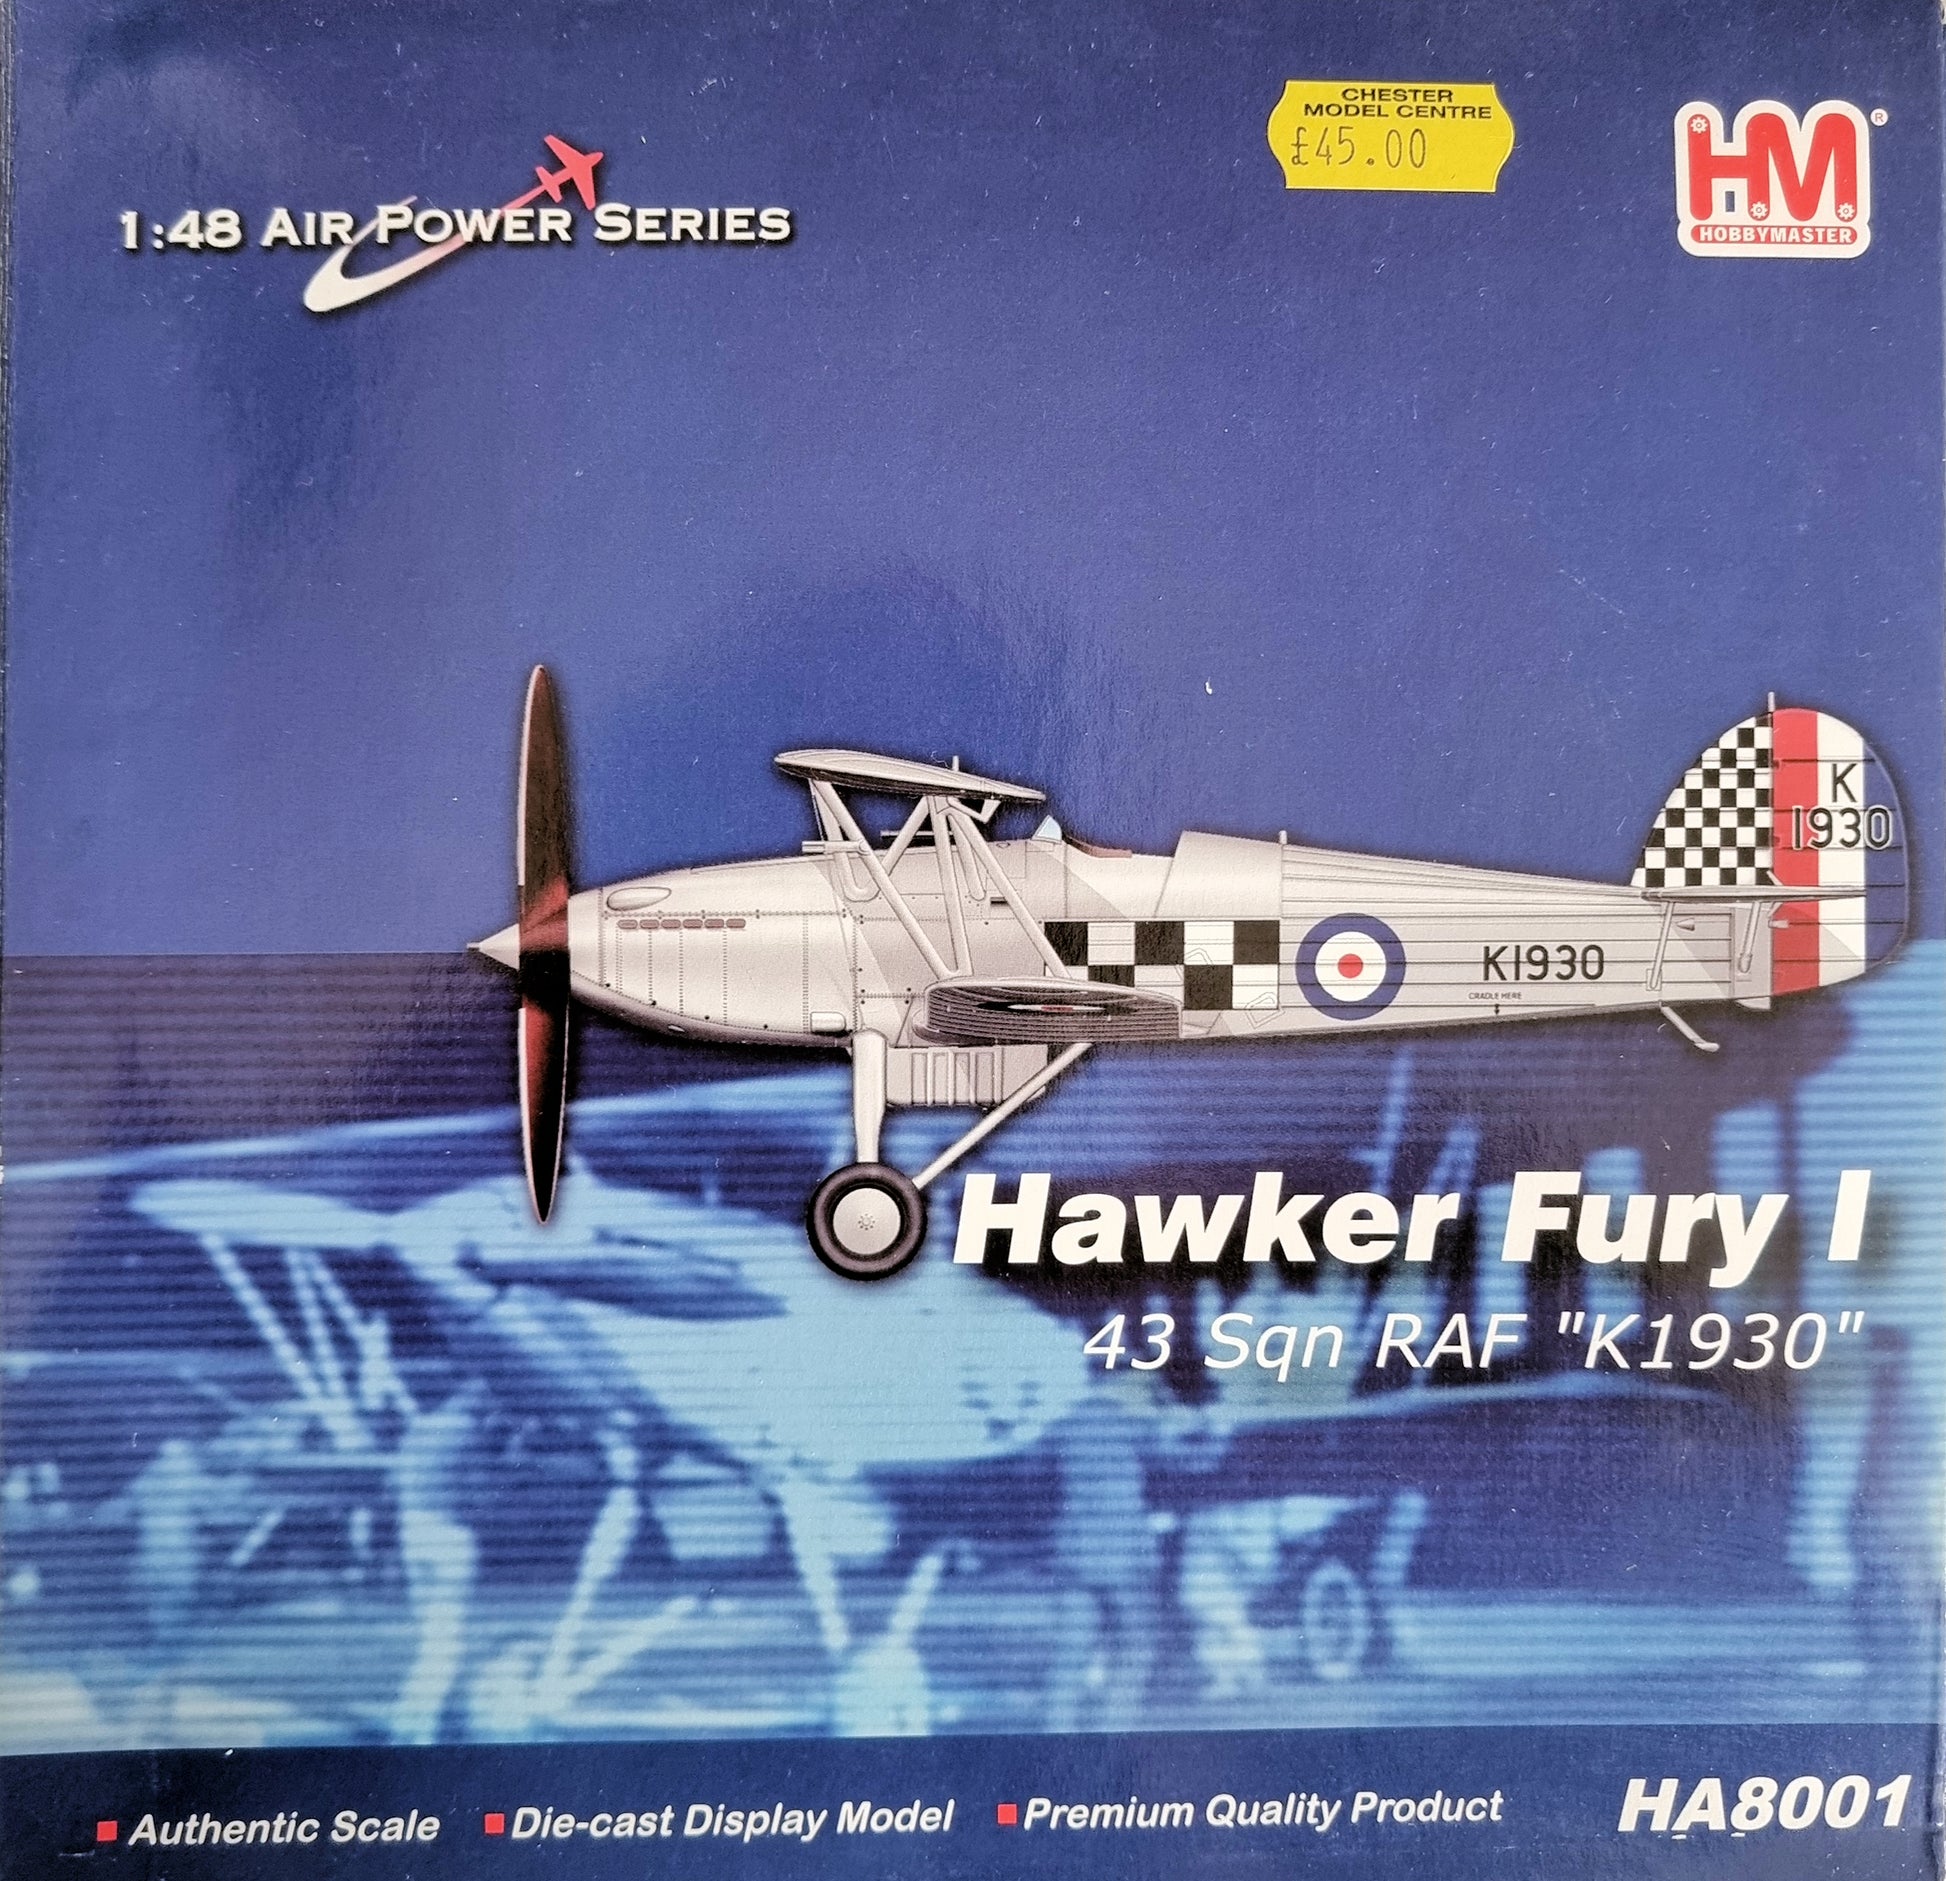 Hobbymaster 1:48 Air Power series Hawker Fury 1 HA8001 - Chester Model Centre